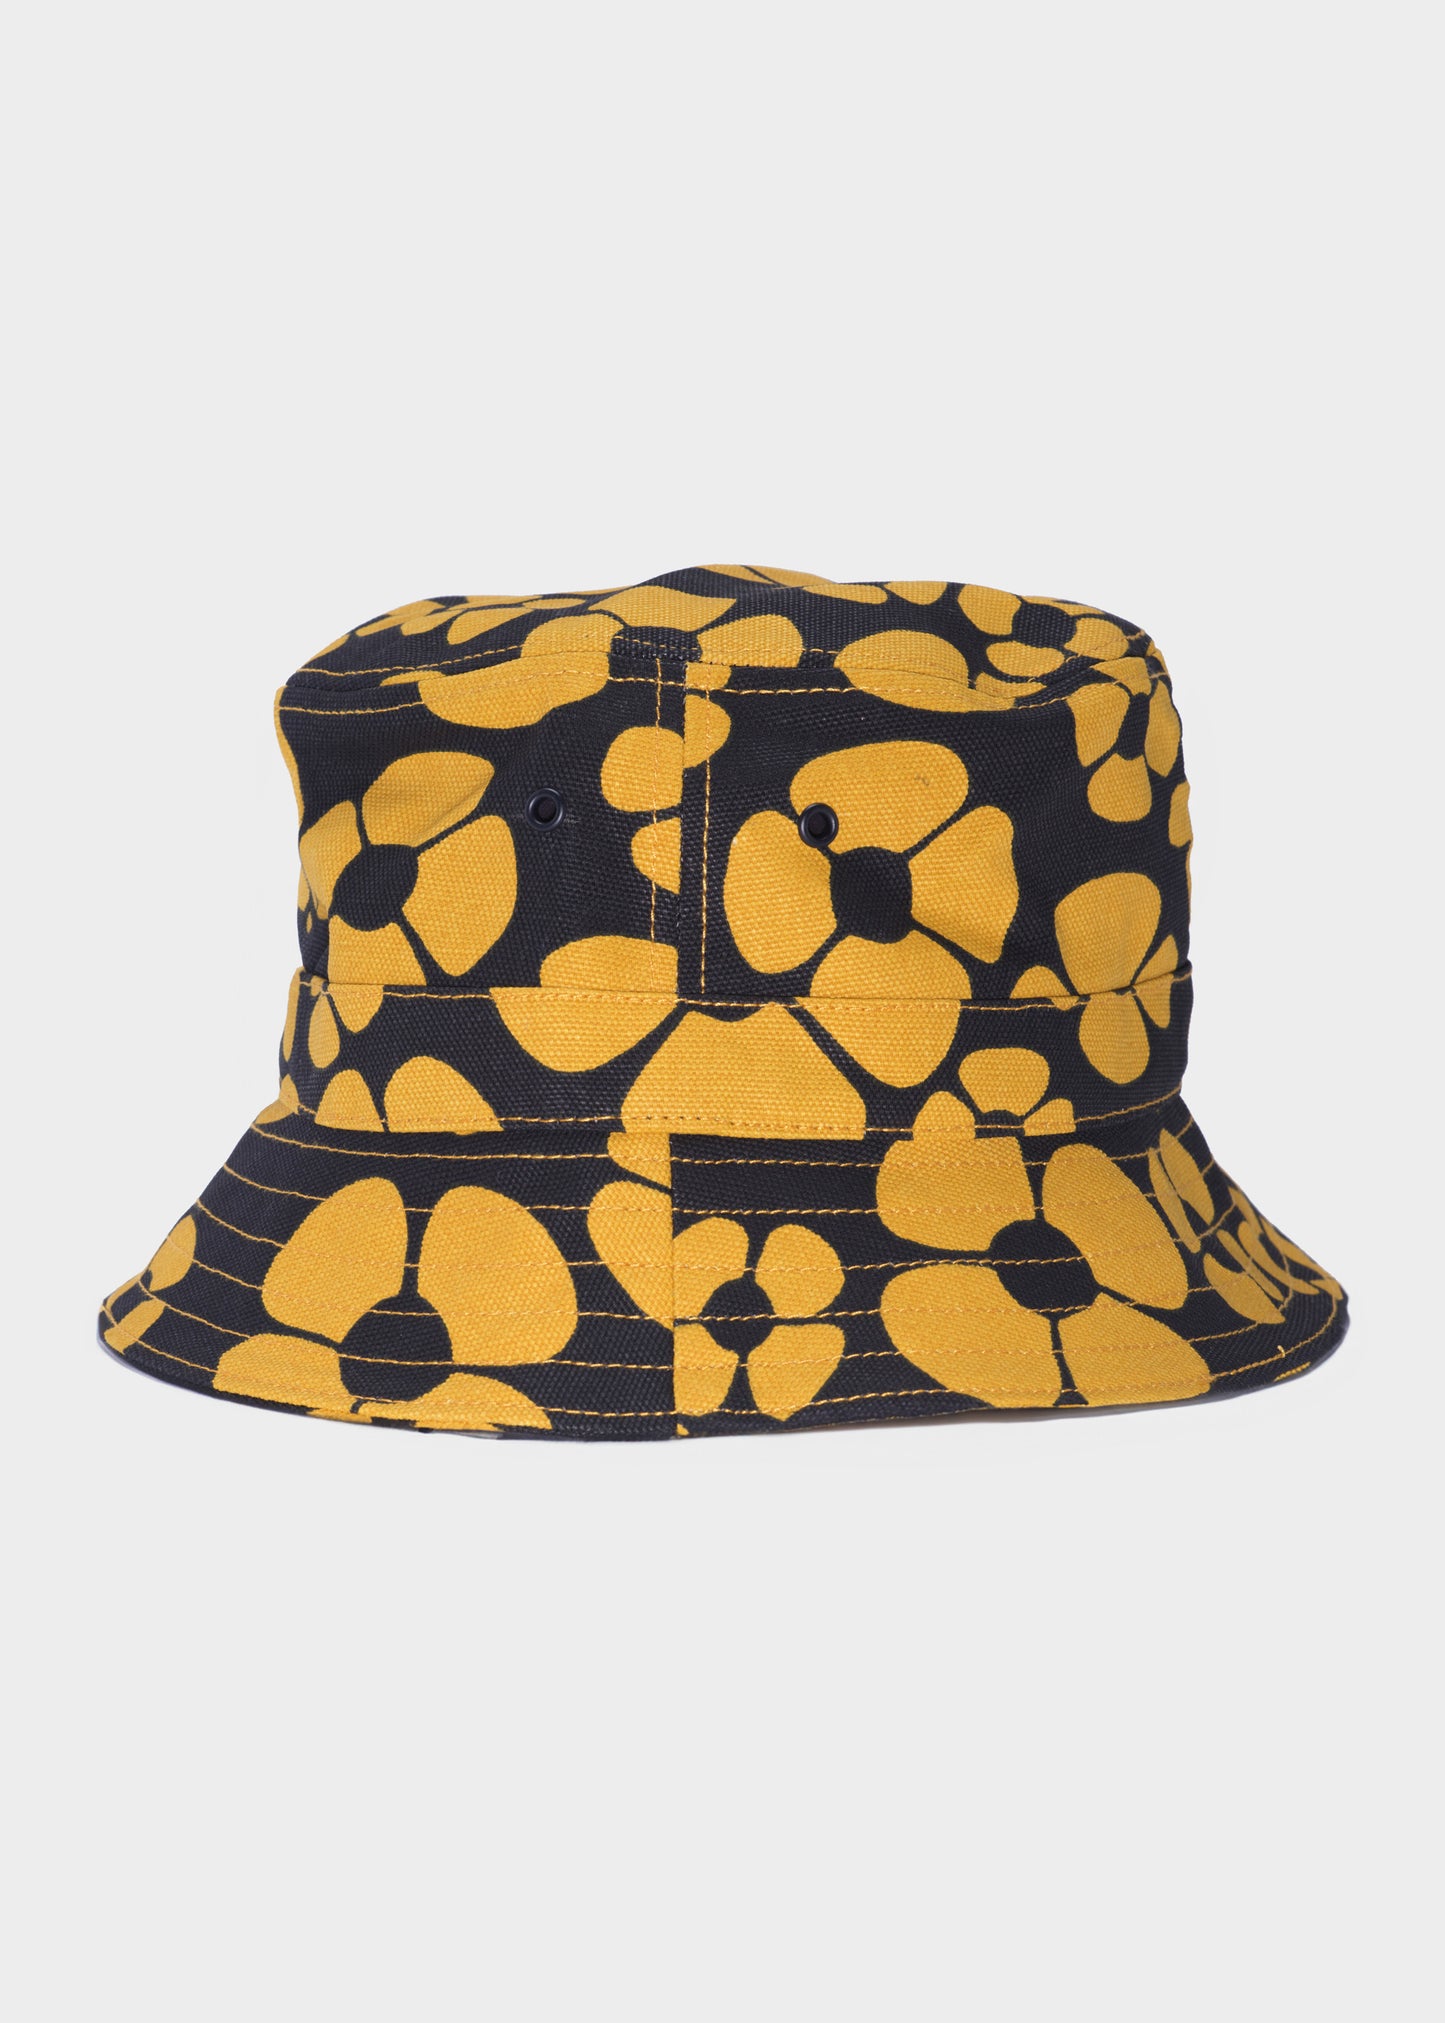 Marni x Carhartt Floral Bucket Hat